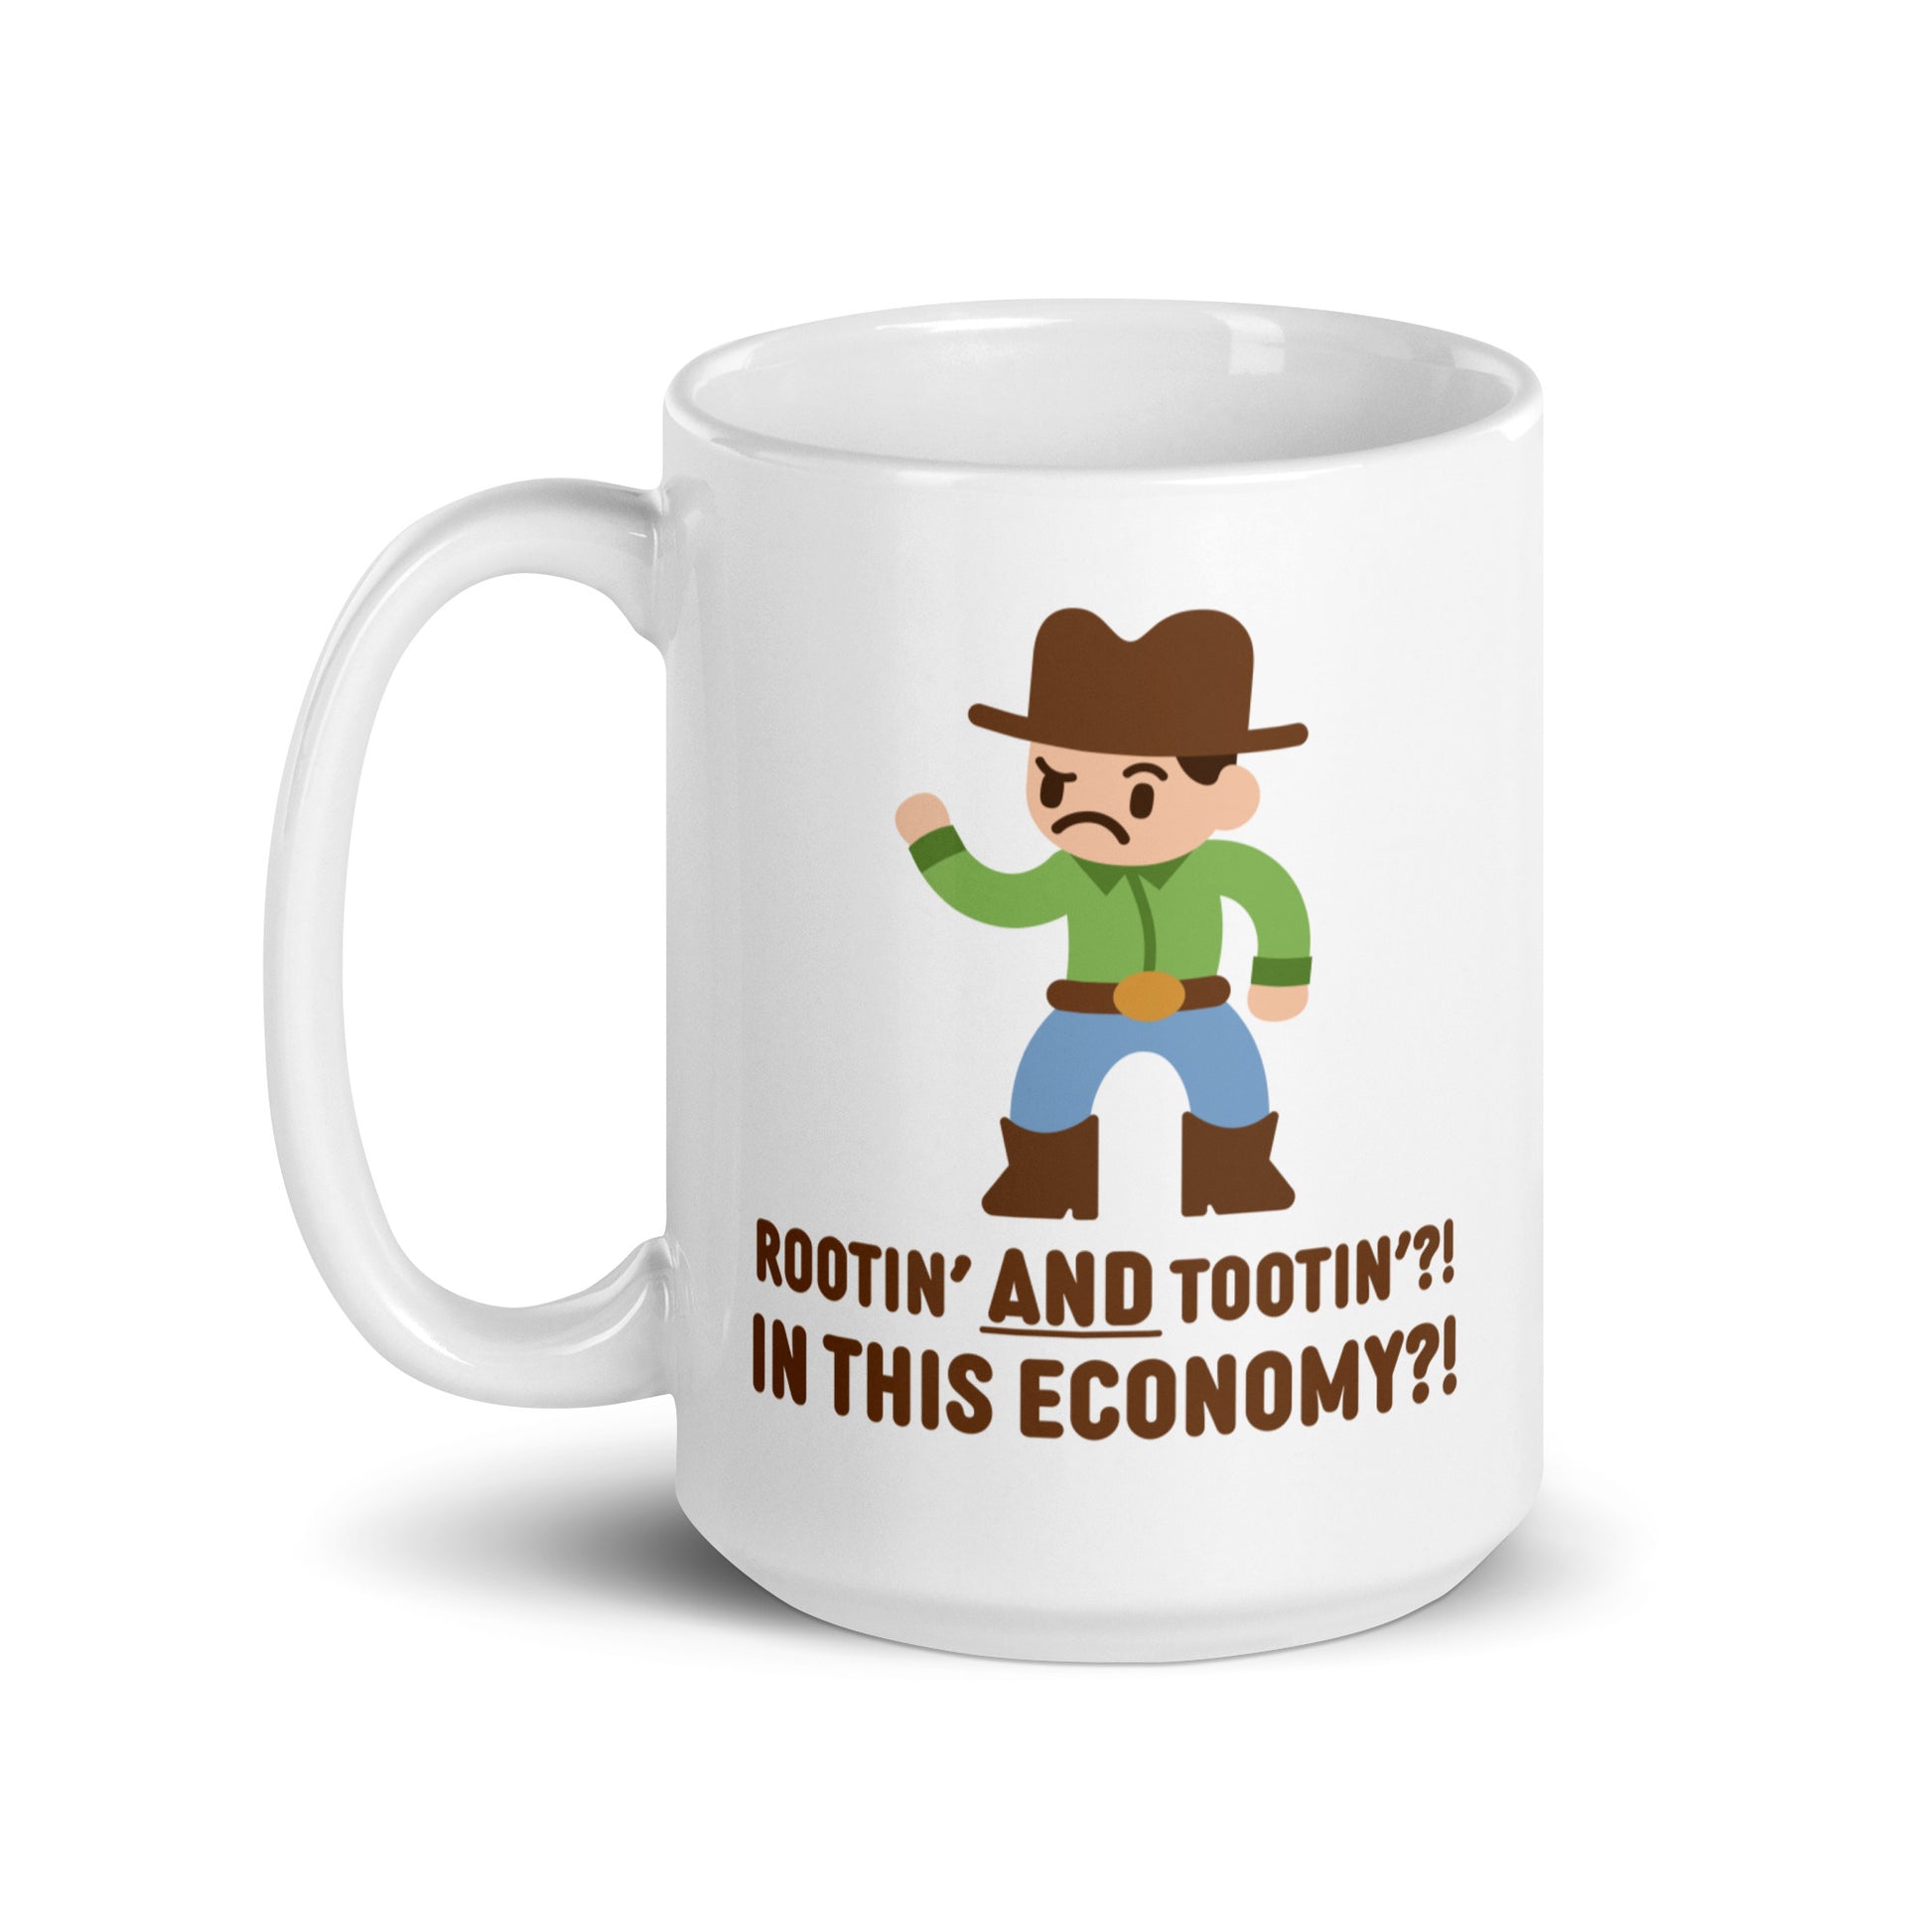 Economy Mugs